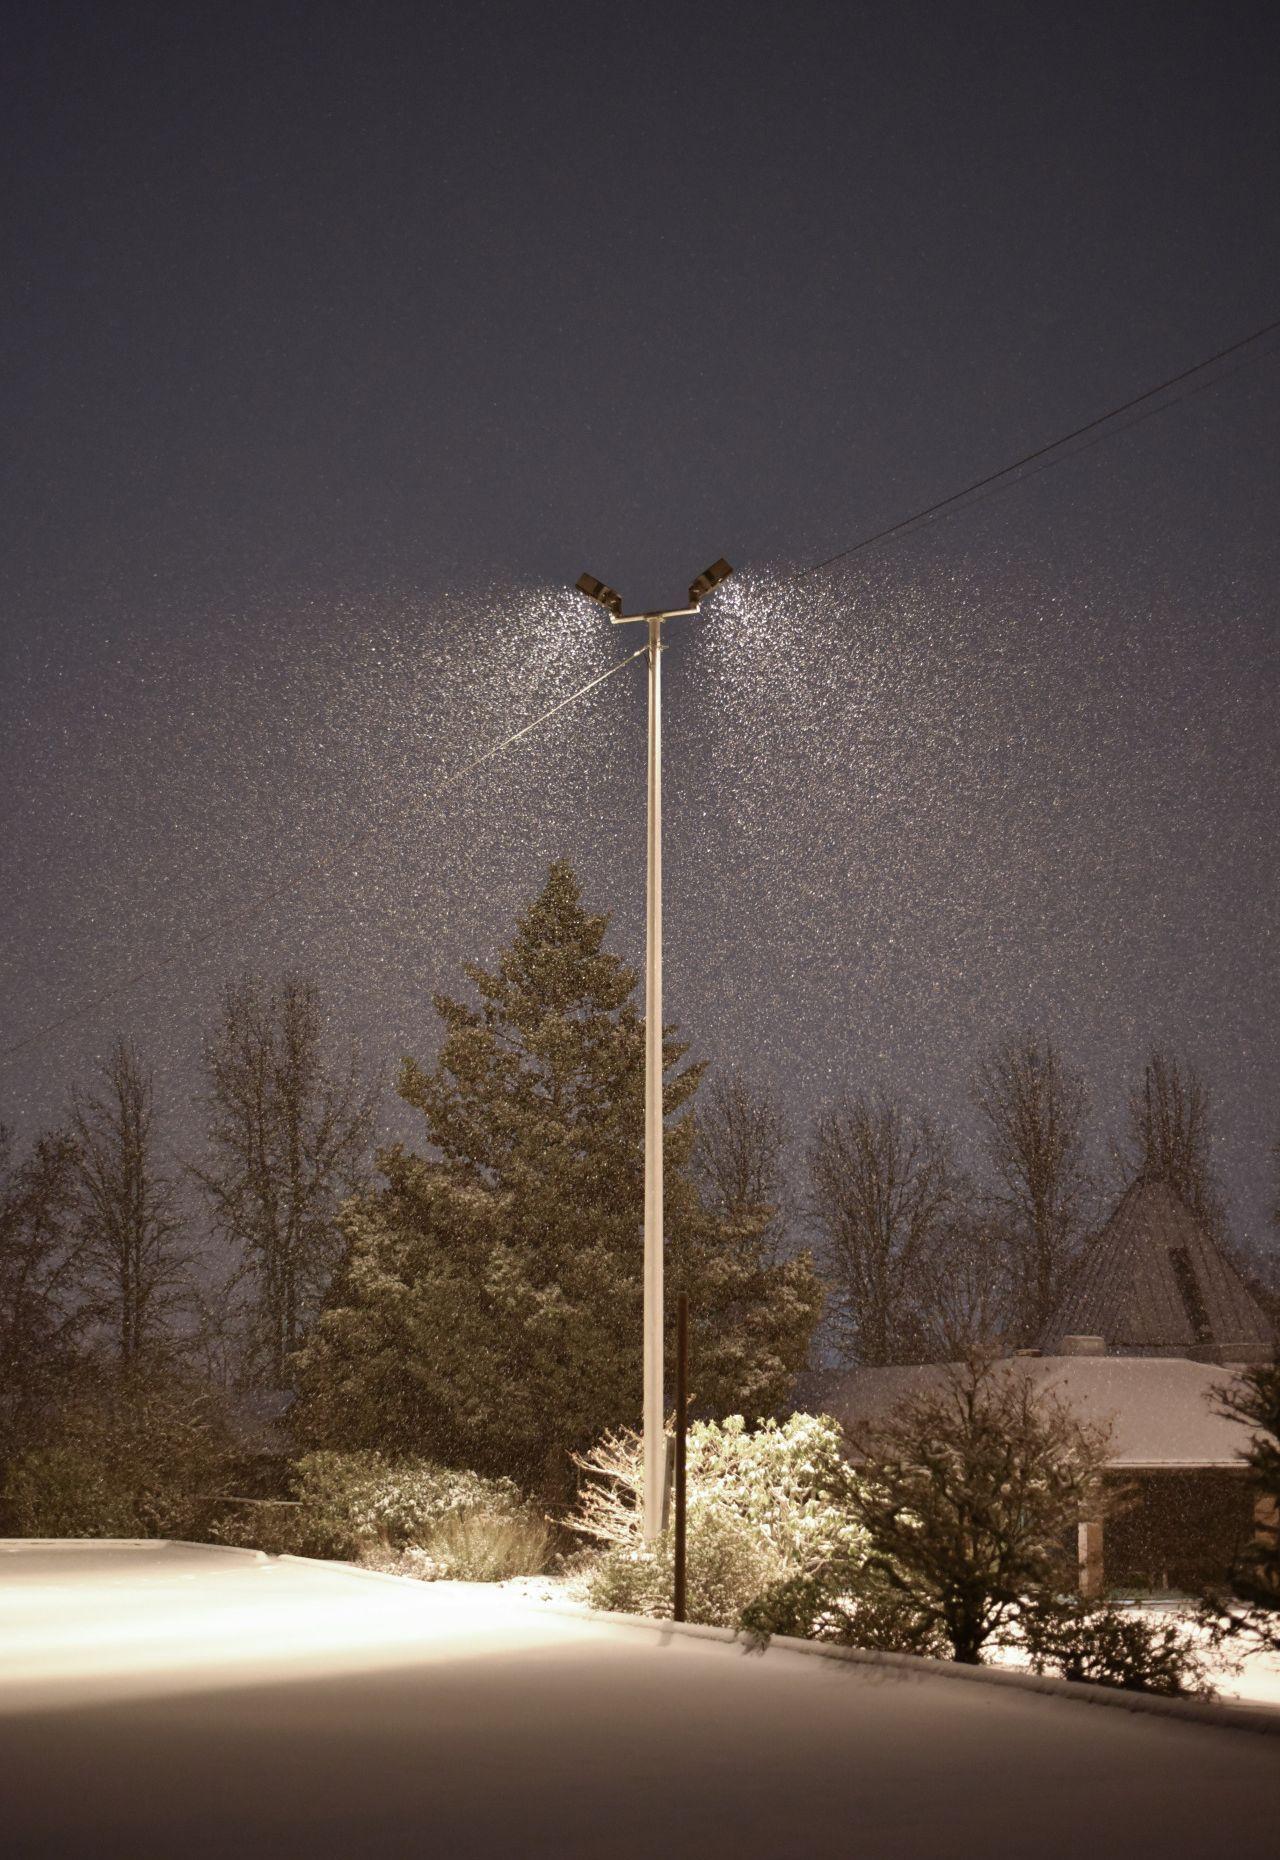 Ночь, улица, фонарь, зима. | Пикабу